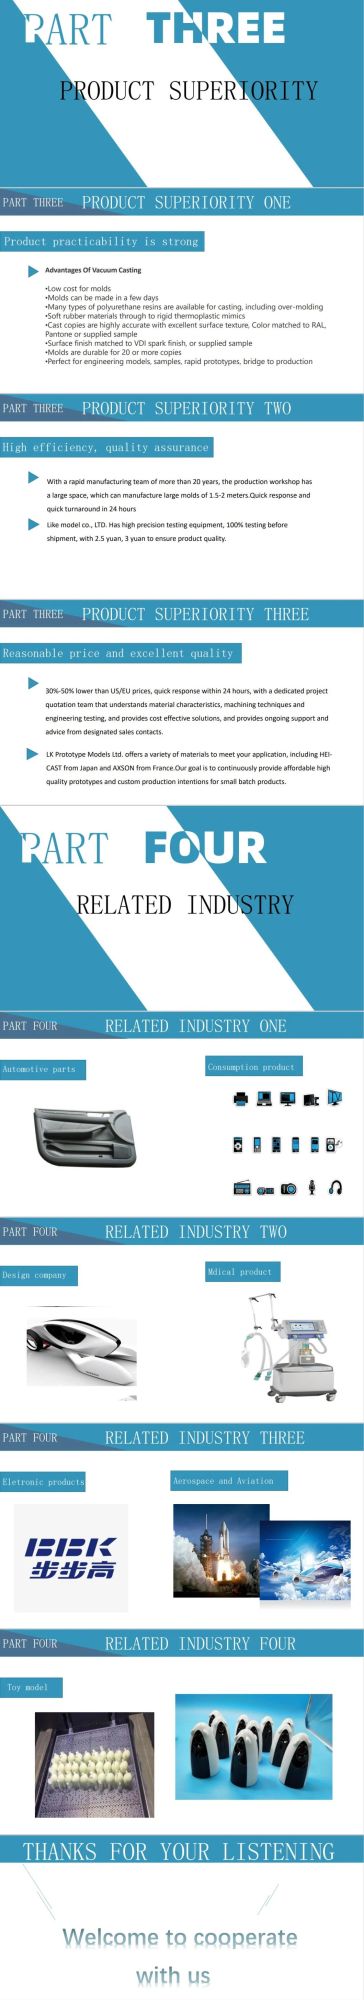 High CNC Precision Parts Small/Metal Parts/Gear/CNC Machining Rod/Holder Mechanical Parts